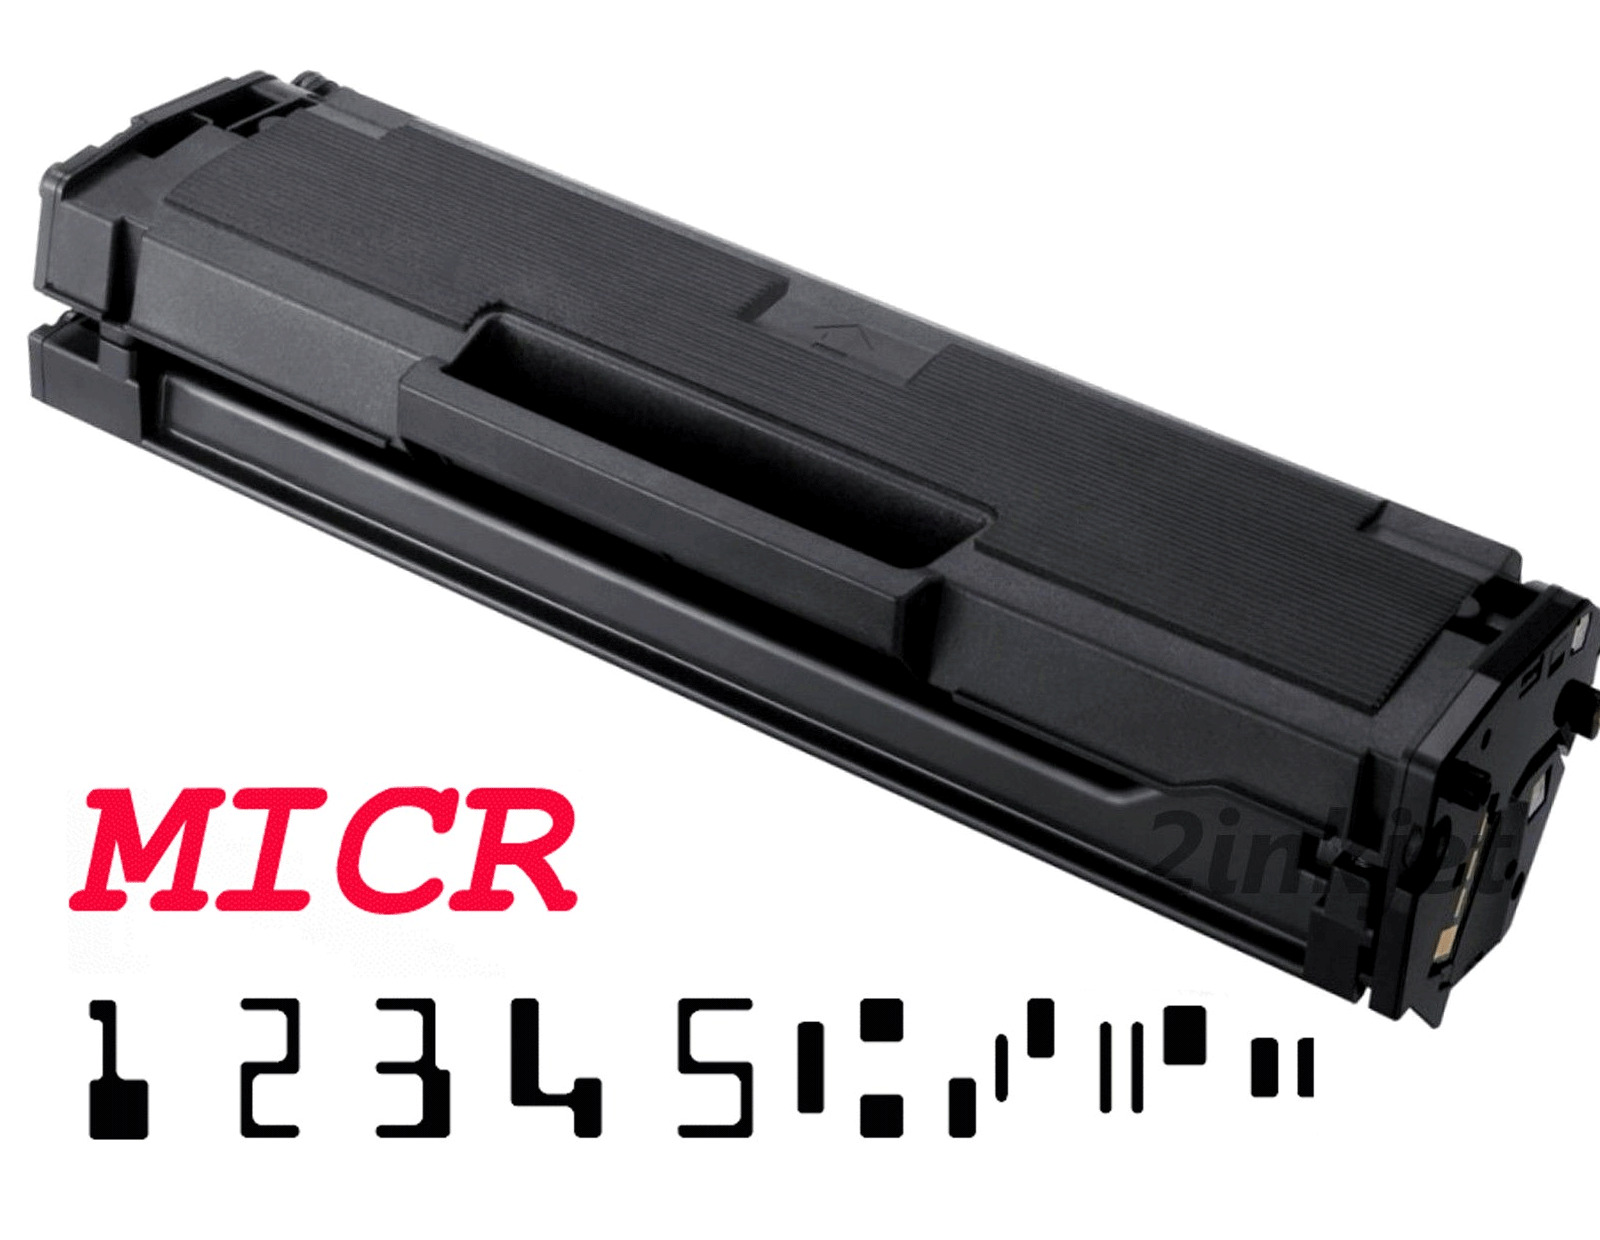 MICR Check HY Toner Cartridge for Samsung 111, Xpress M2024W, M2070FW, M2020W